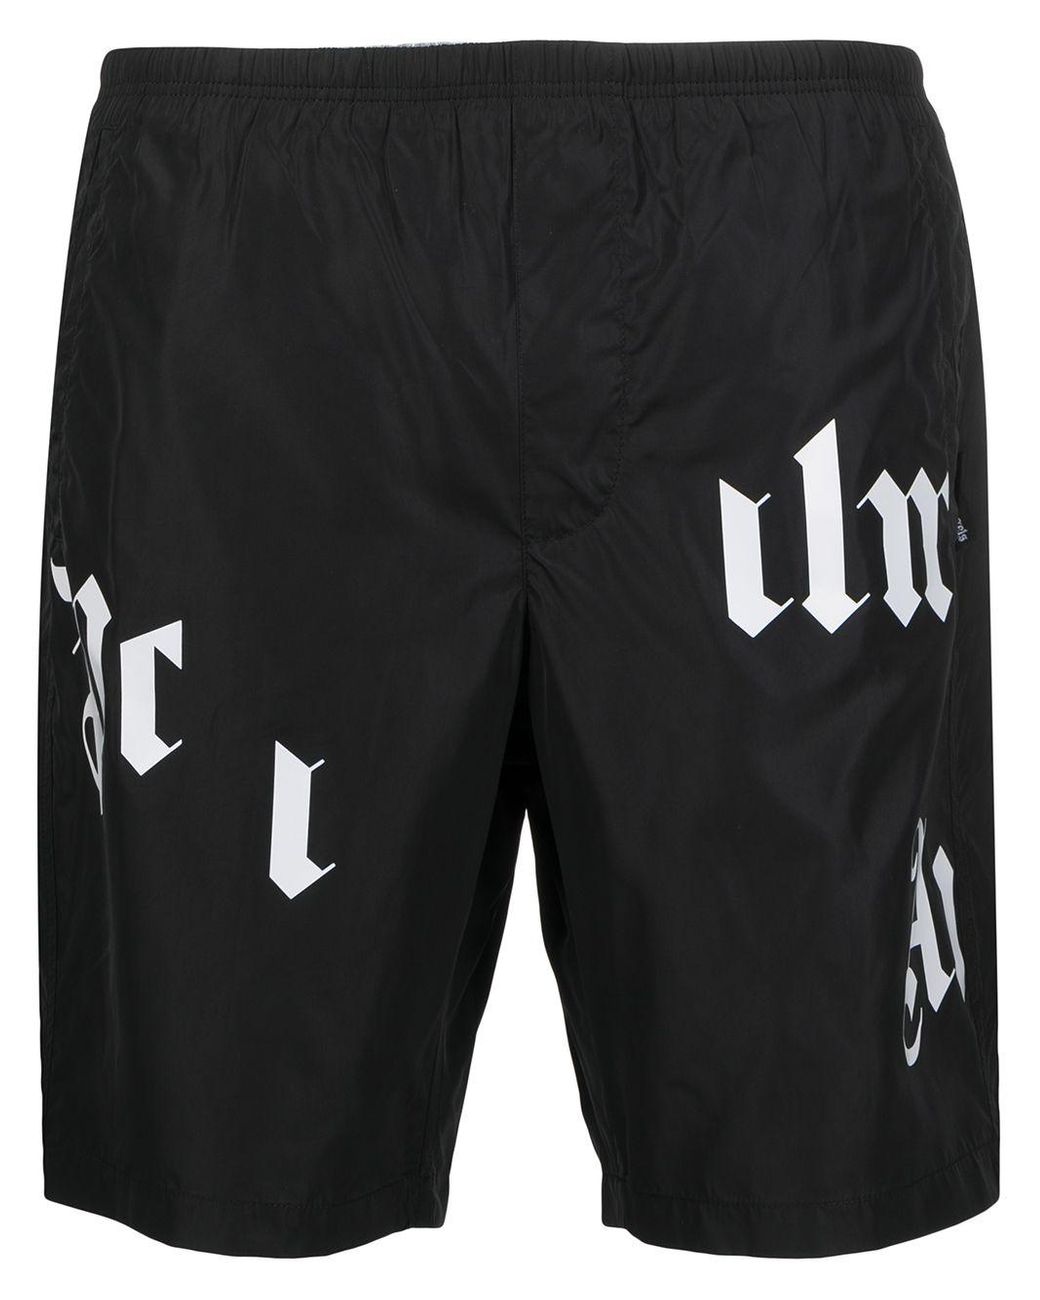 Palm Angels Synthetic Broken-logo Swim Shorts in Black for Men - Lyst